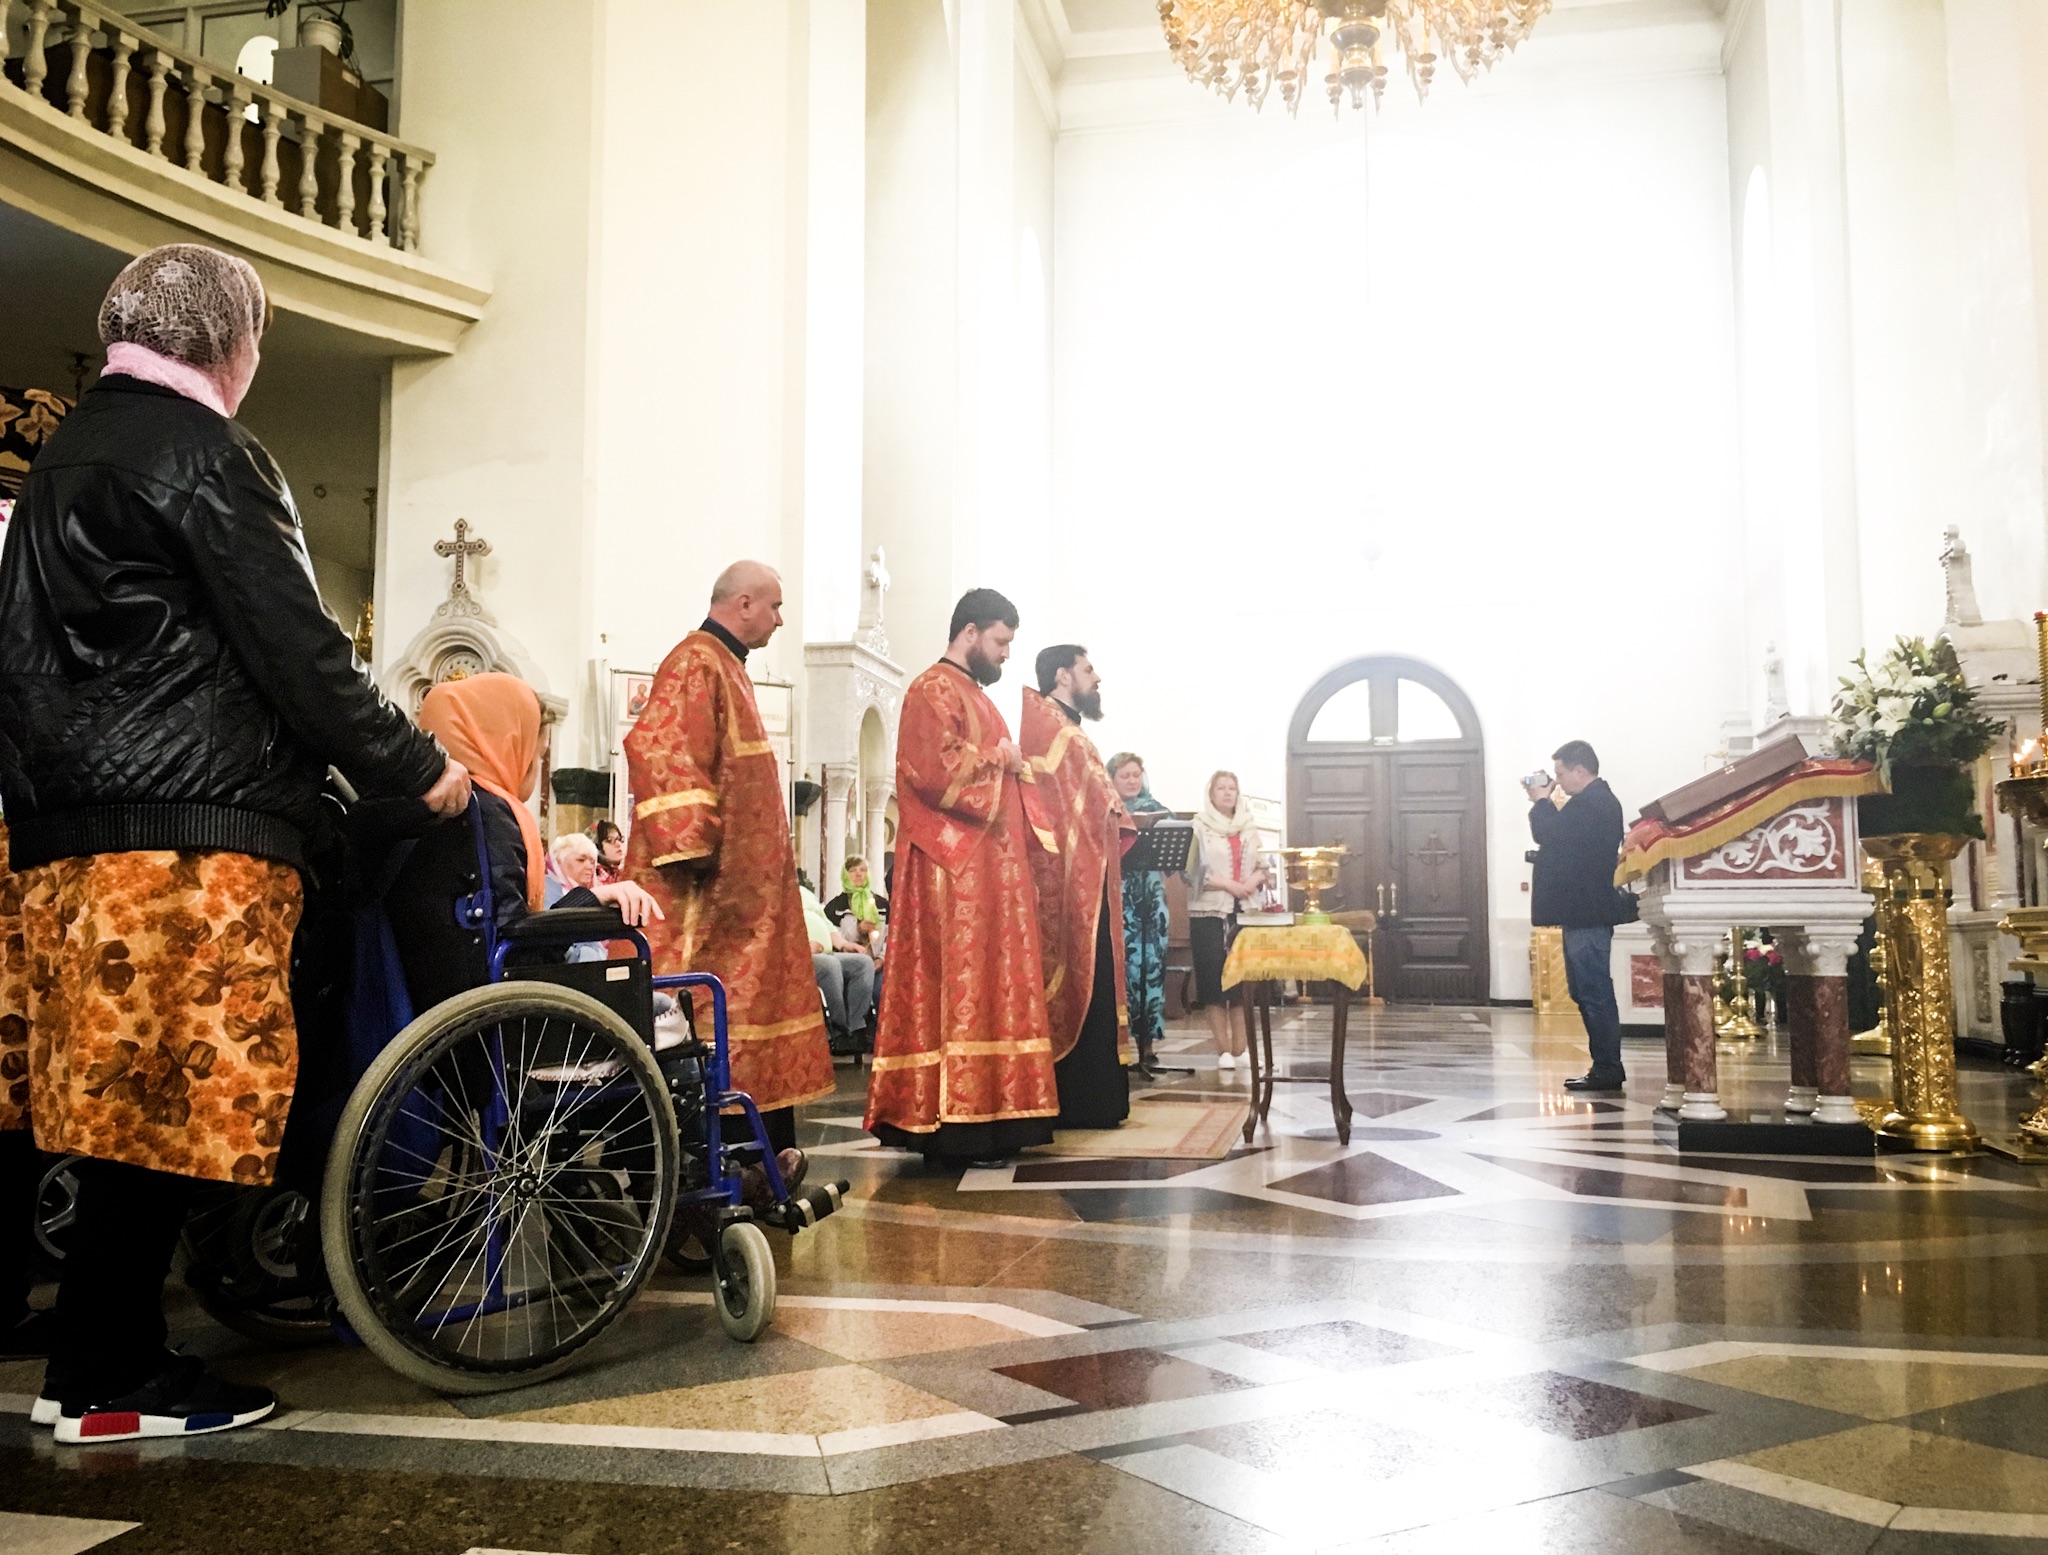 Дом инвалидов в краснодаре oldness ru. Инвалид в церкви. Костел для инвалидов. Инвалиды Краснодар.